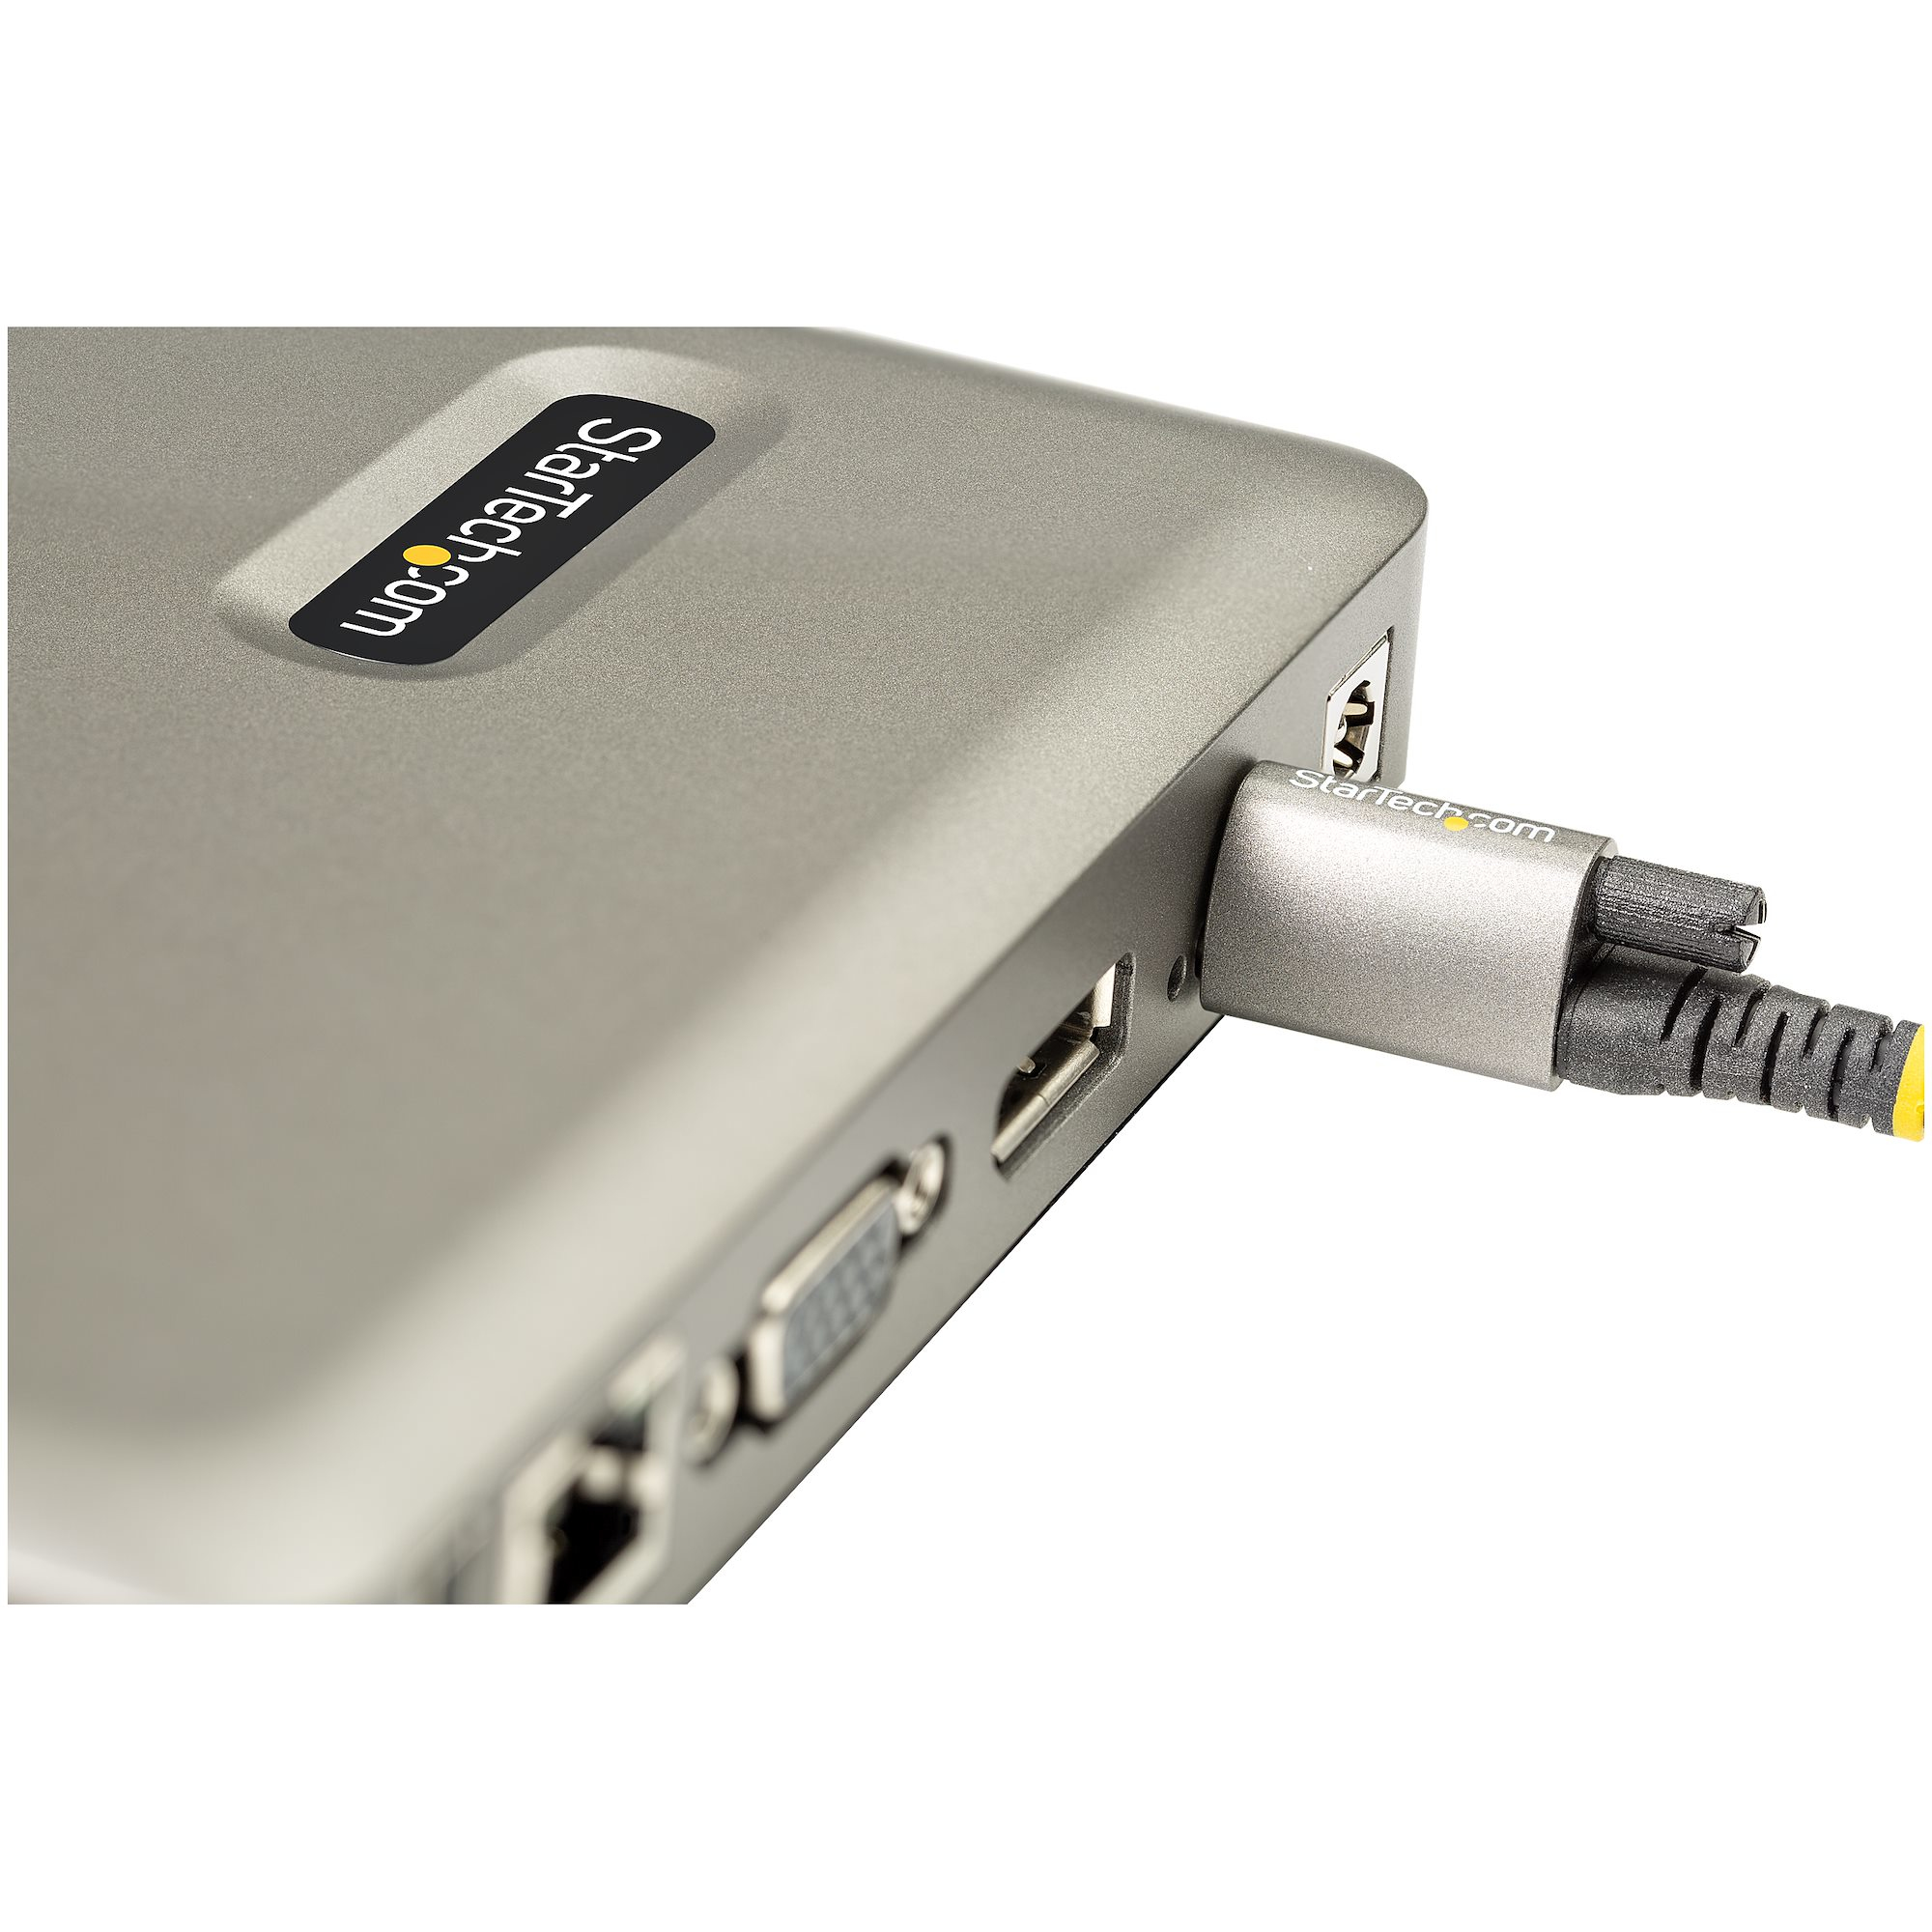 StarTech.com USB C Dock, USB-C to DisplayPort 4K 30Hz or VGA, Mini USB-C Laptop Docking Station with 65W Power Delivery Pass-Through Charging, 4-Port USB 3.1 Gen 1 Hub, GbE - Universal USB Type C Port Replicator (DKM30CHDPDUE)